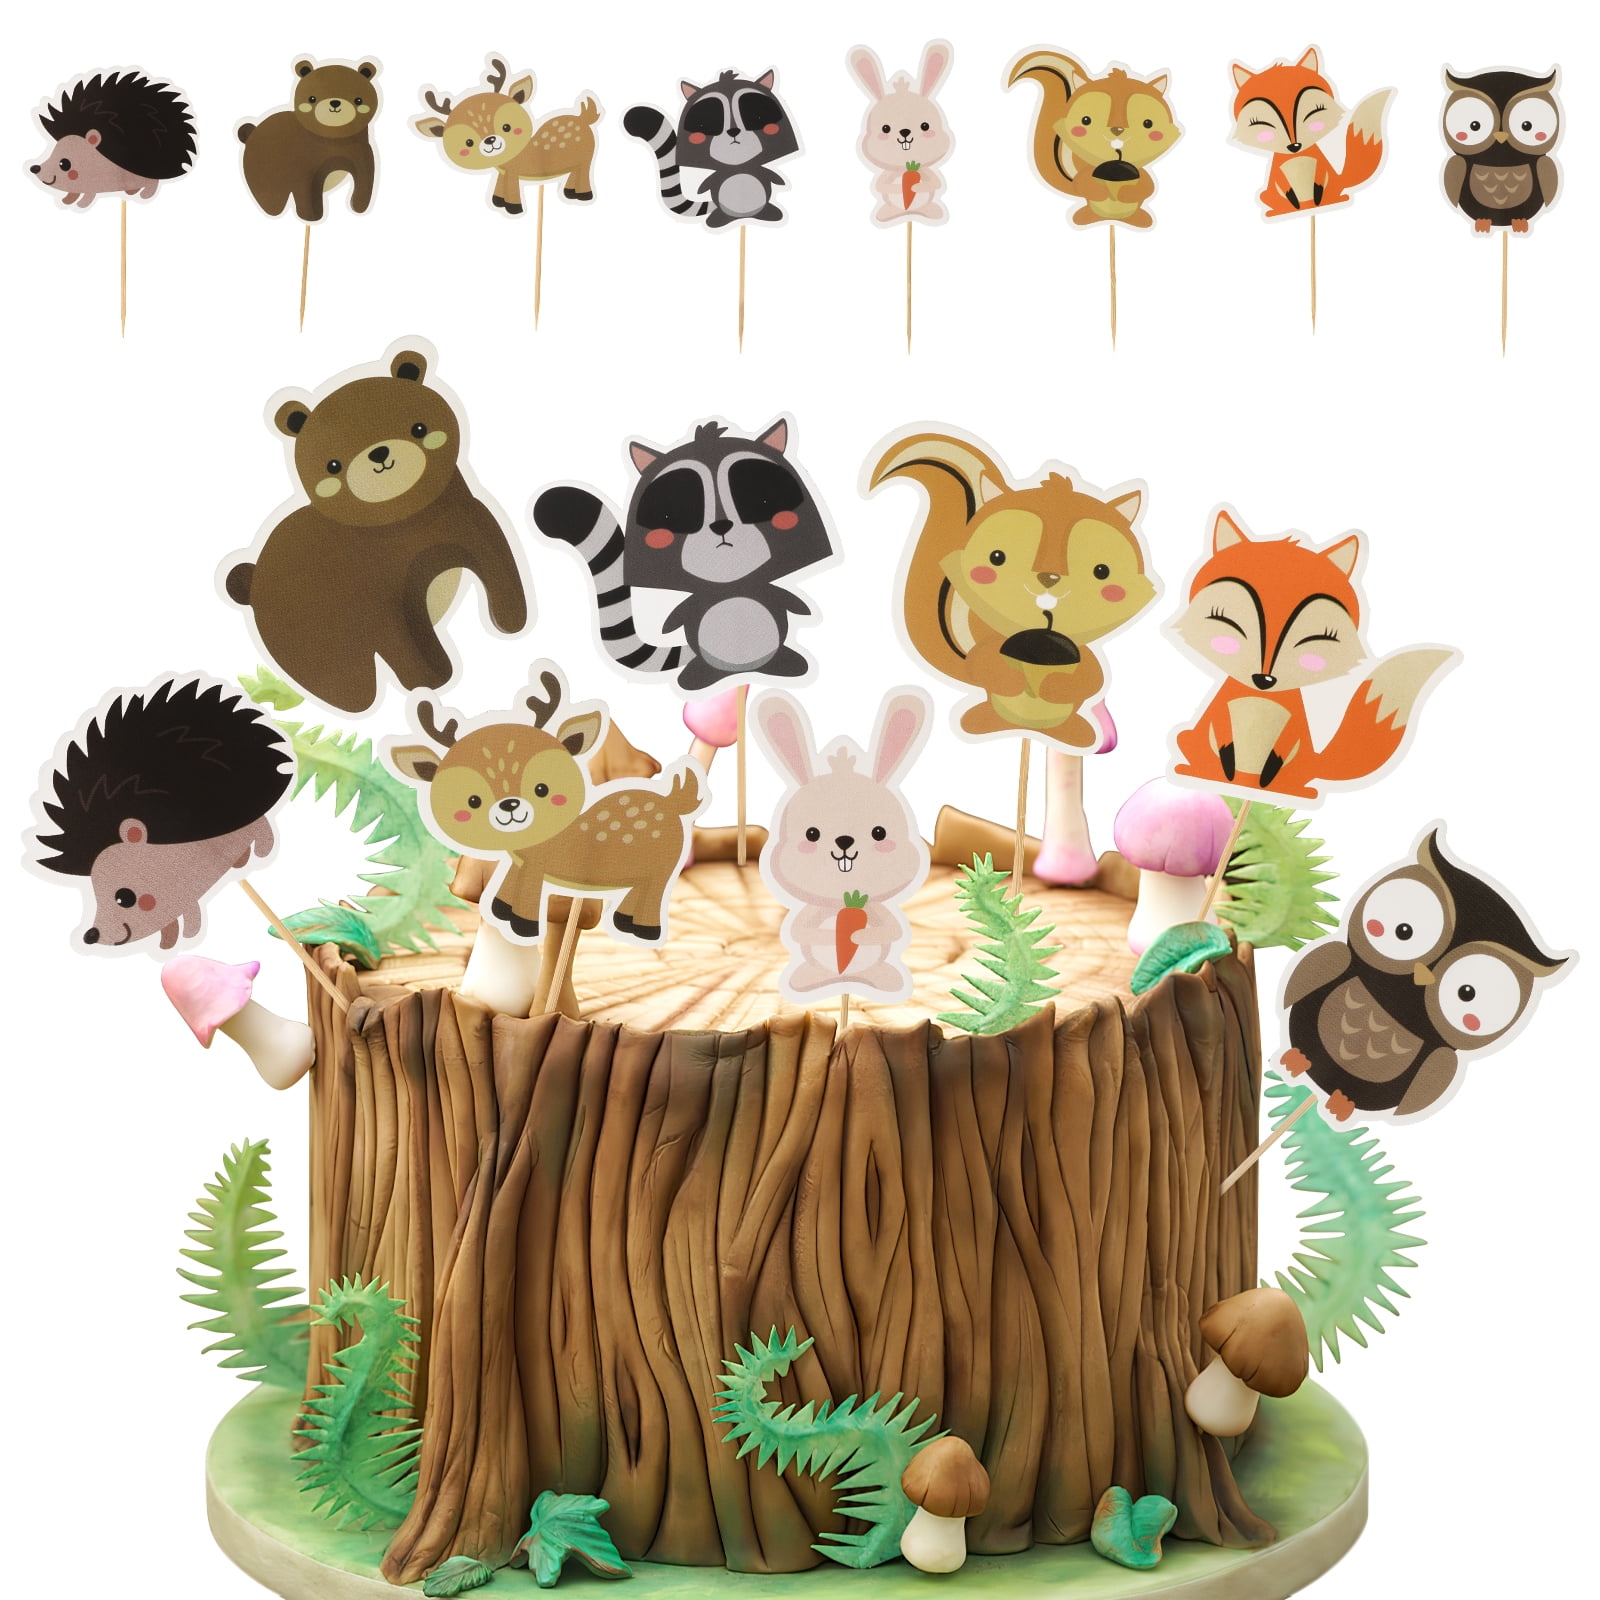 10 Amazing Animals Cake Toppers Compilation - YouTube